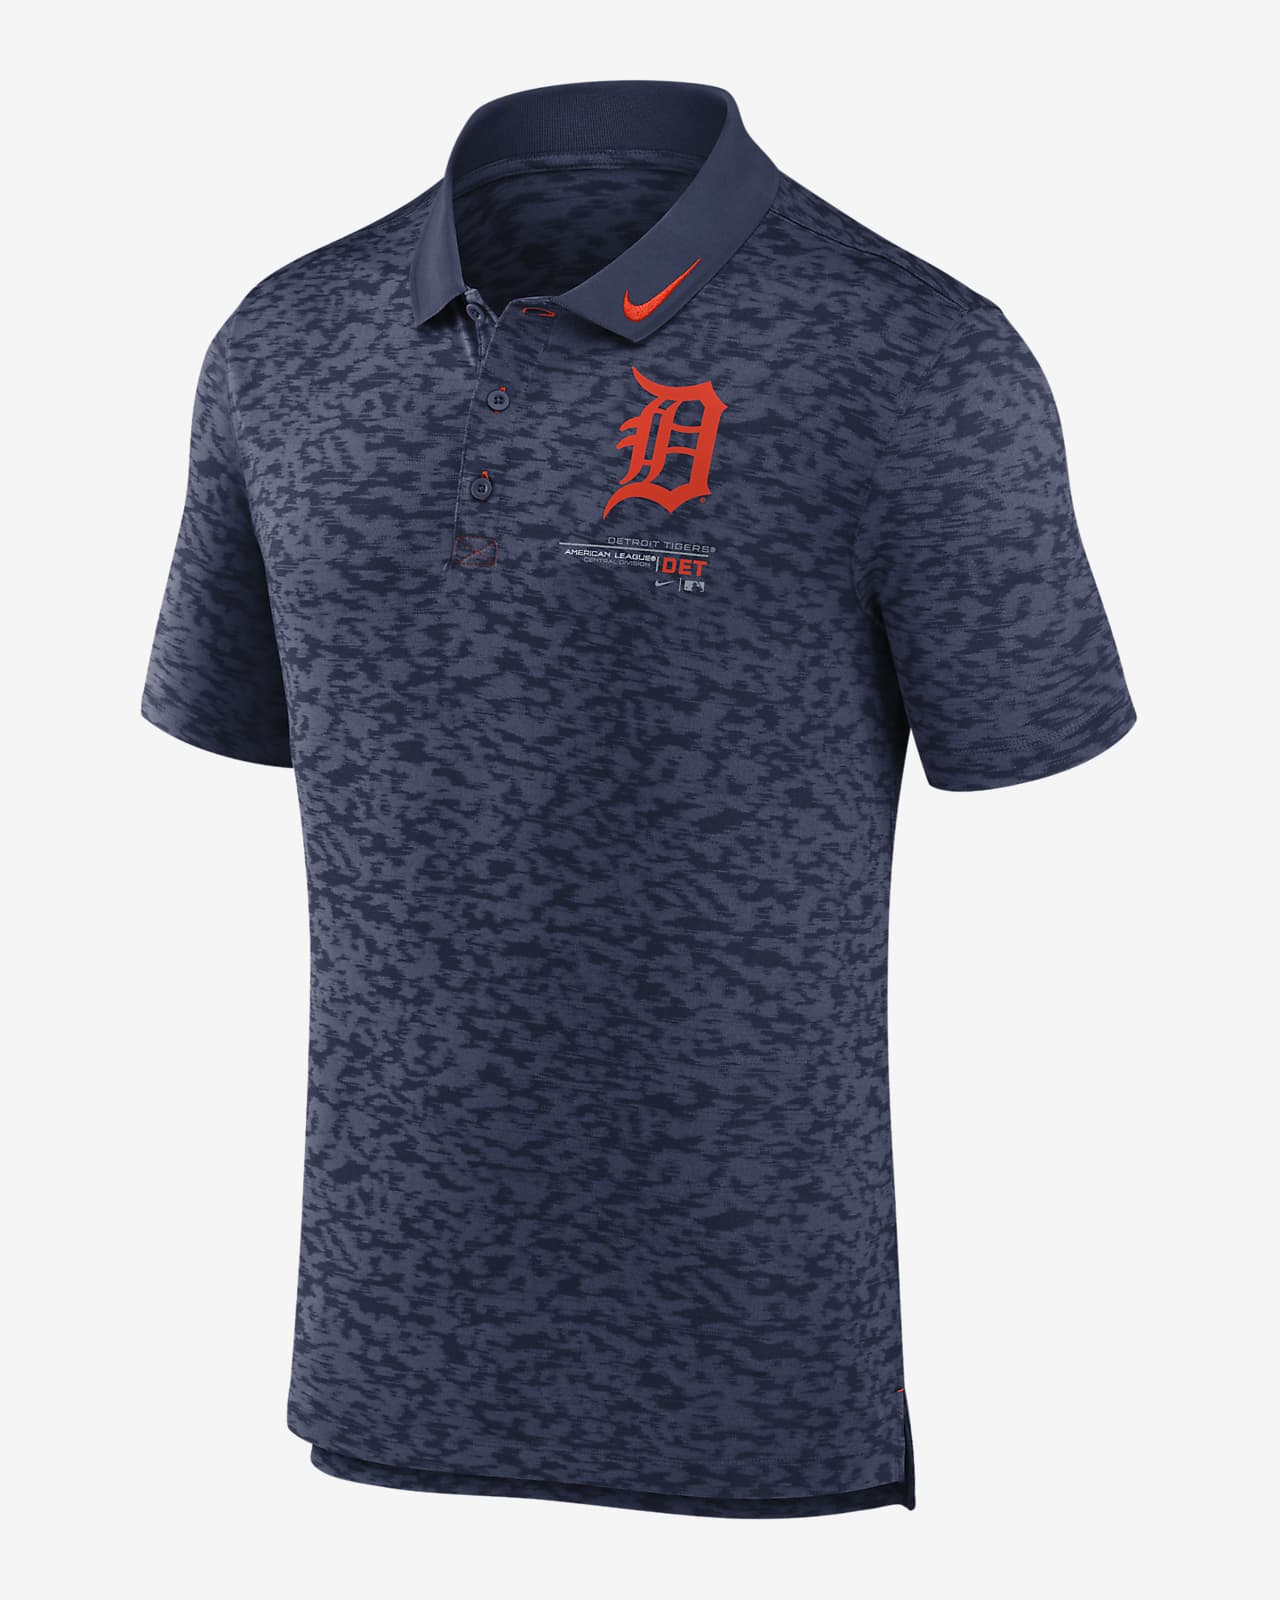 Nike Next Level (MLB Detroit Tigers) Men's Polo.